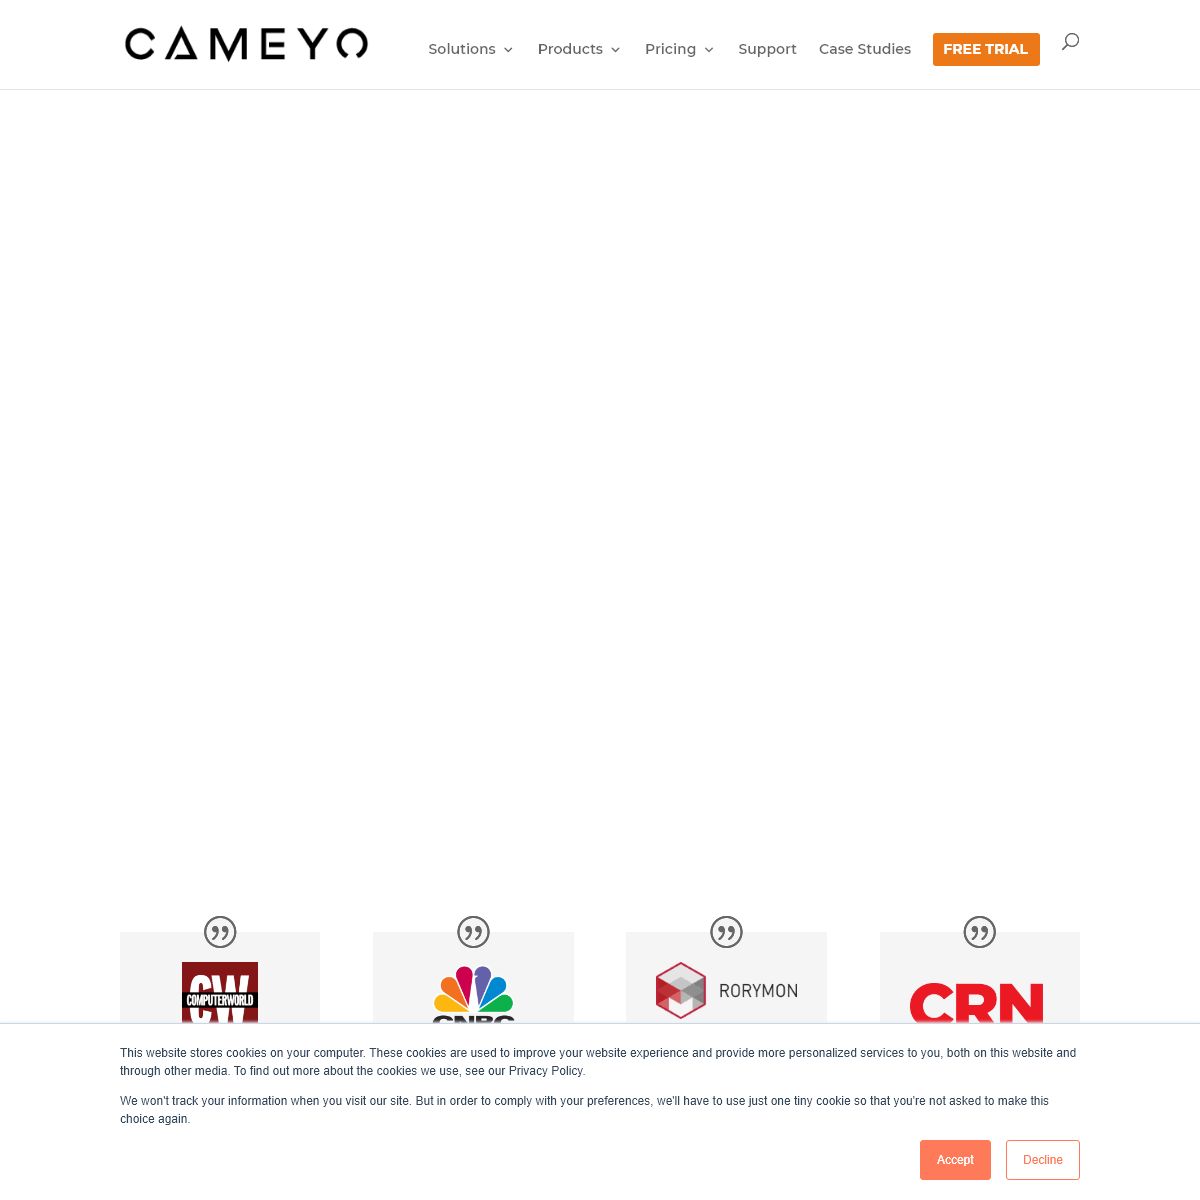 A complete backup of cameyo.com